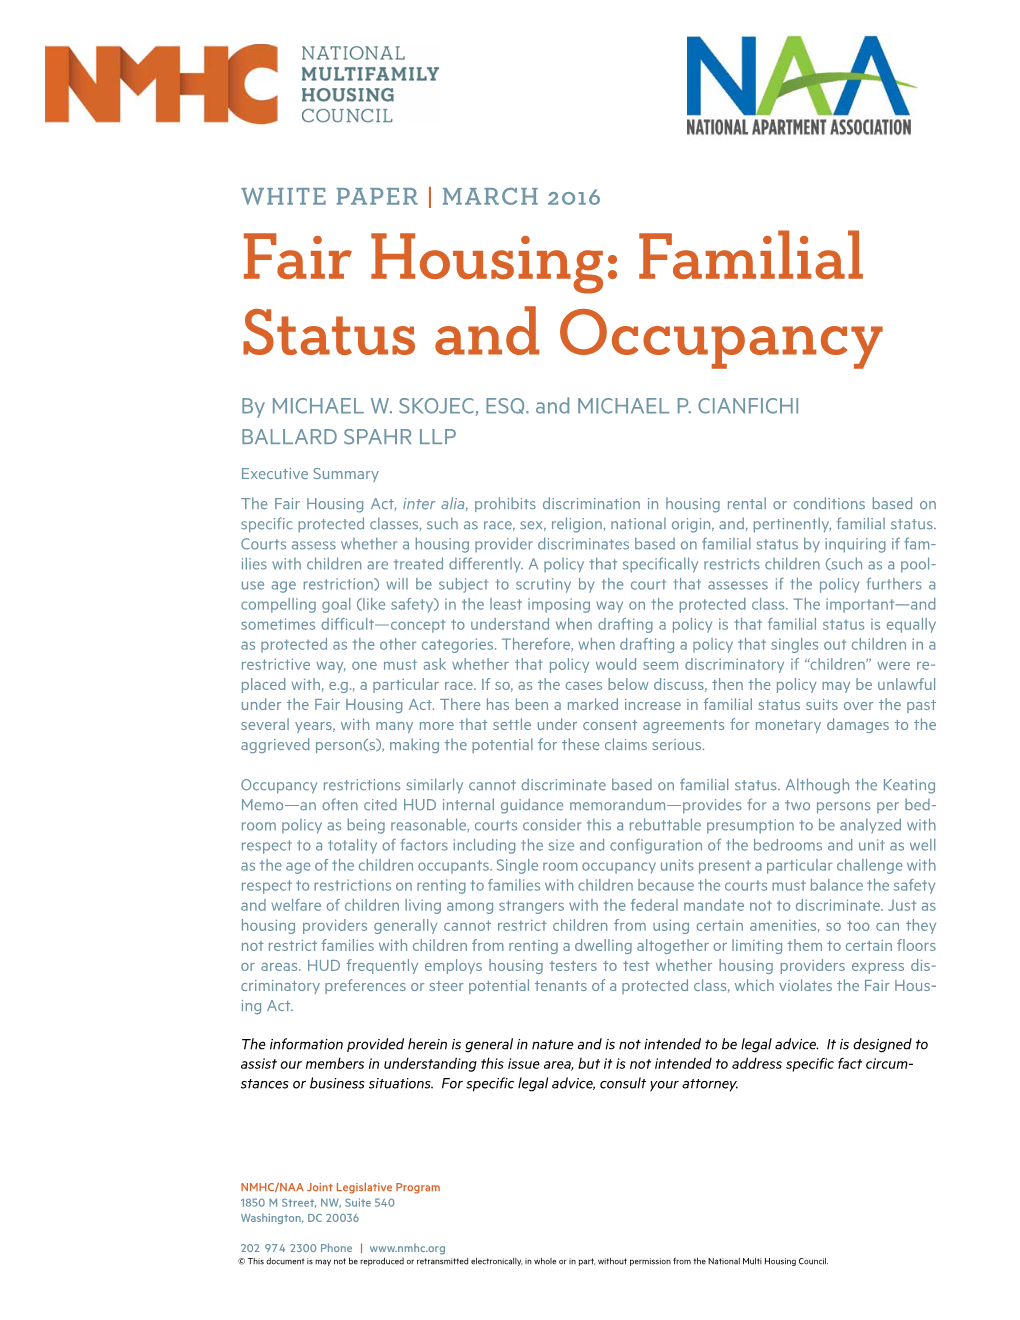 Fair Housing: Familial Status and Occupancy by MICHAEL W